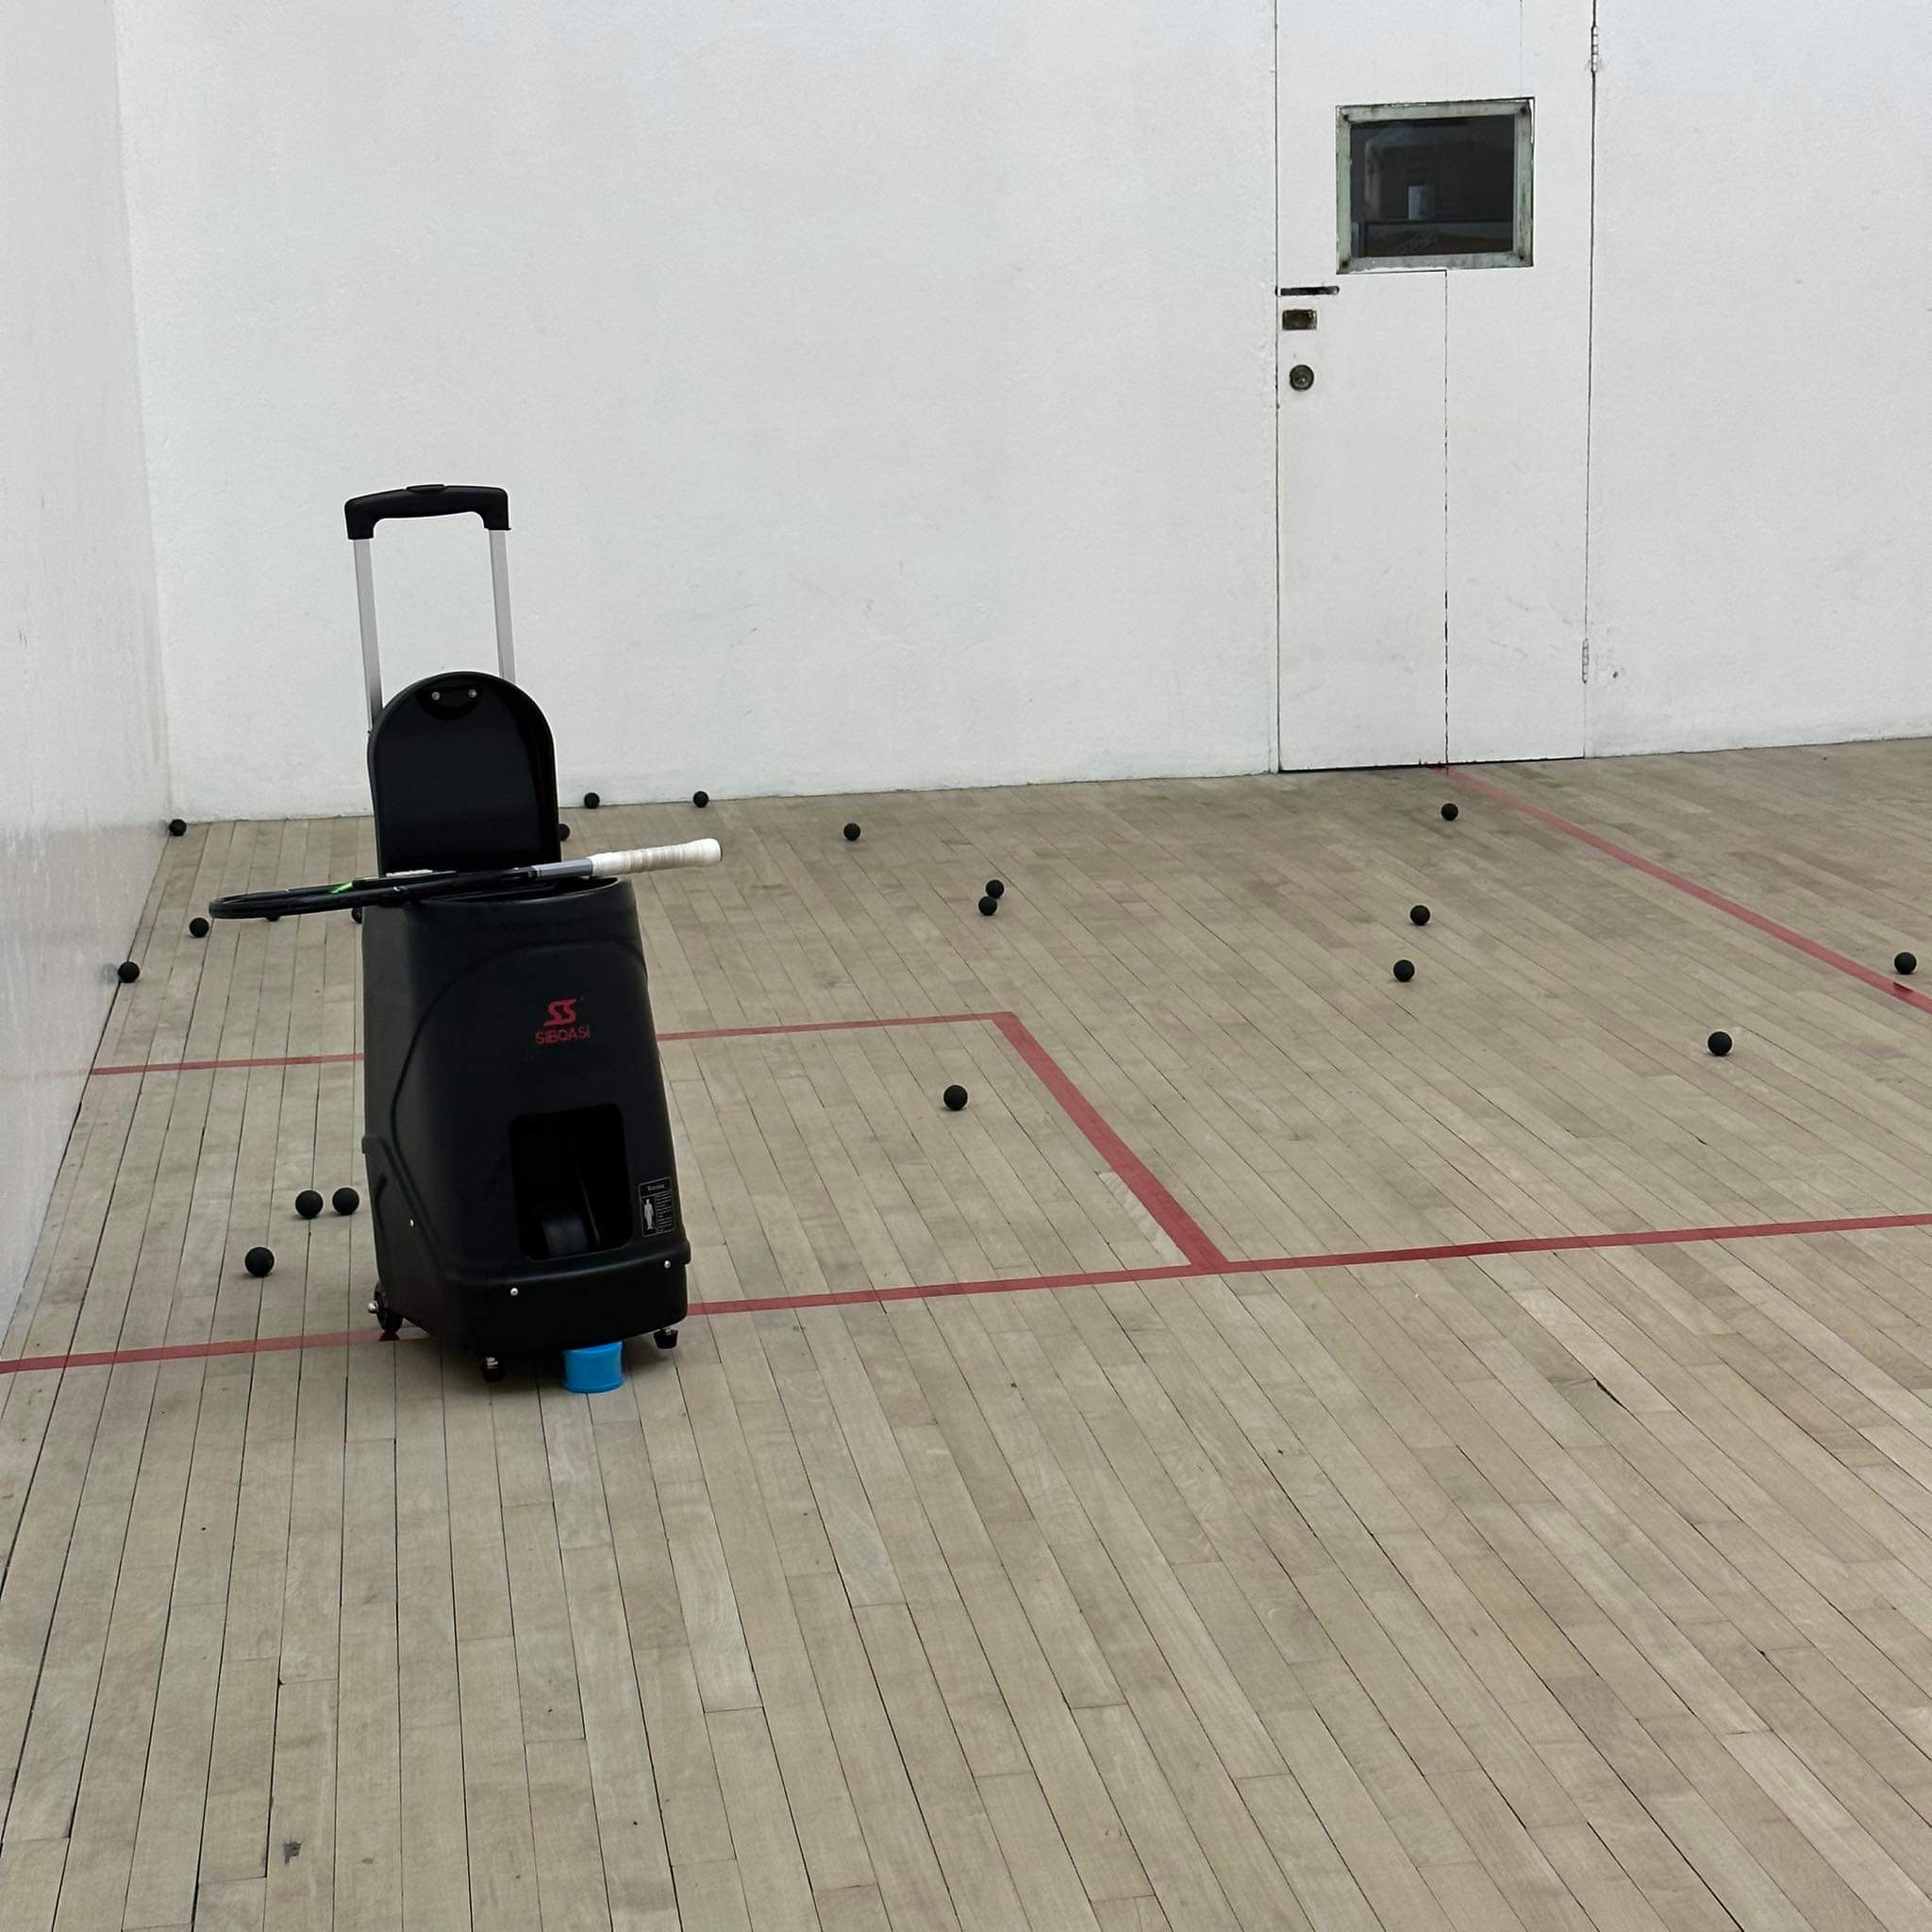 squash ball machine